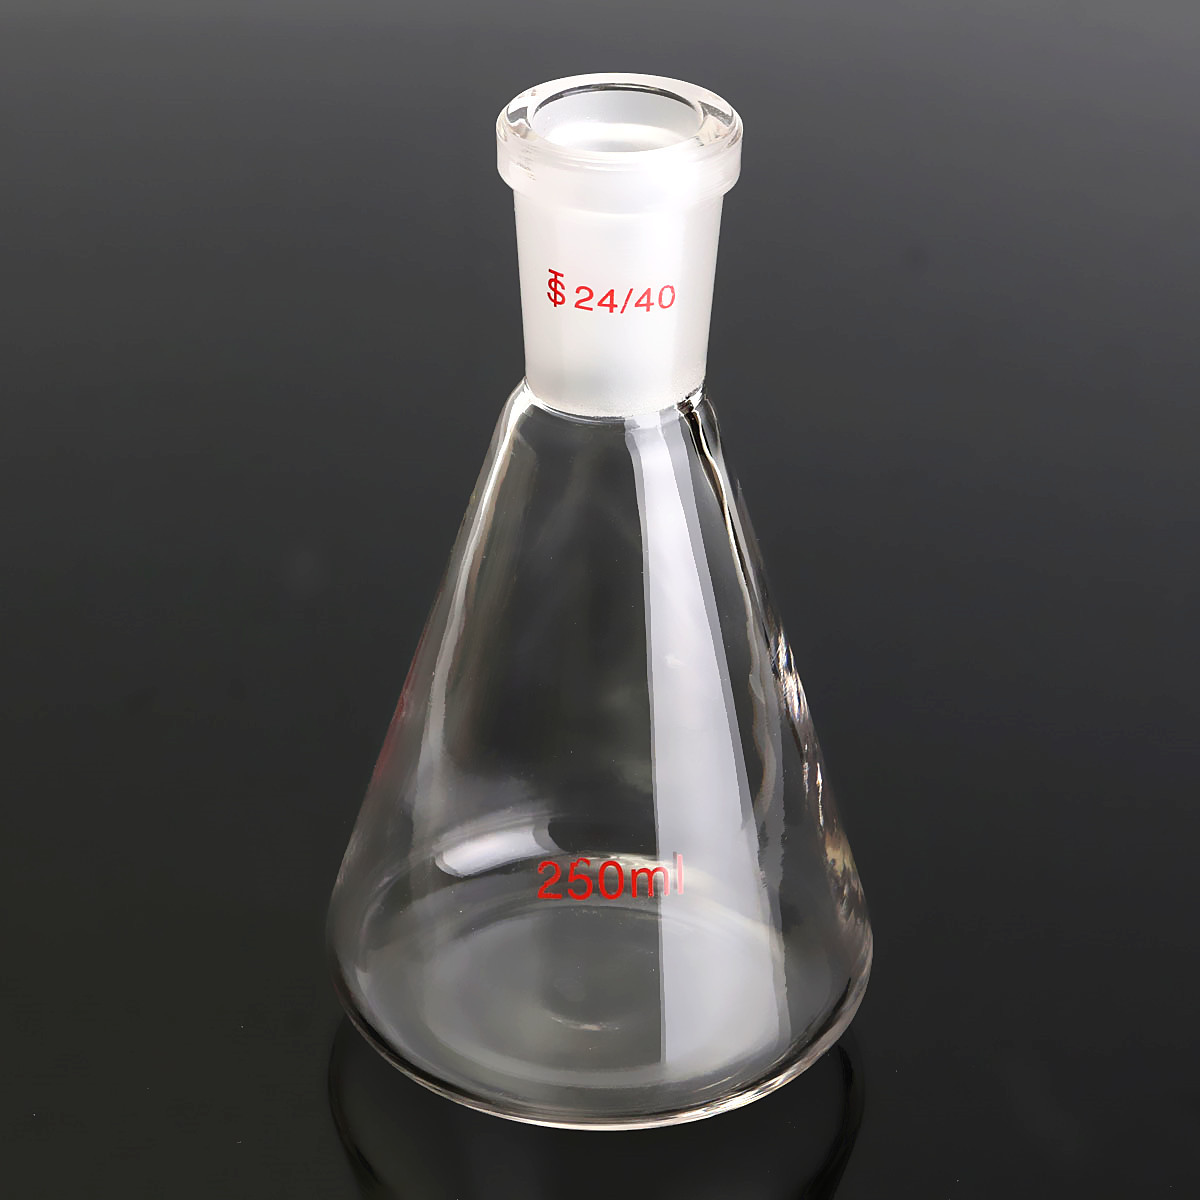 250ml-2440-Glass-Erlenmeyer-Flask-Chemistry-Conical-Bottle-Laboratory-Glassware-1043918-1